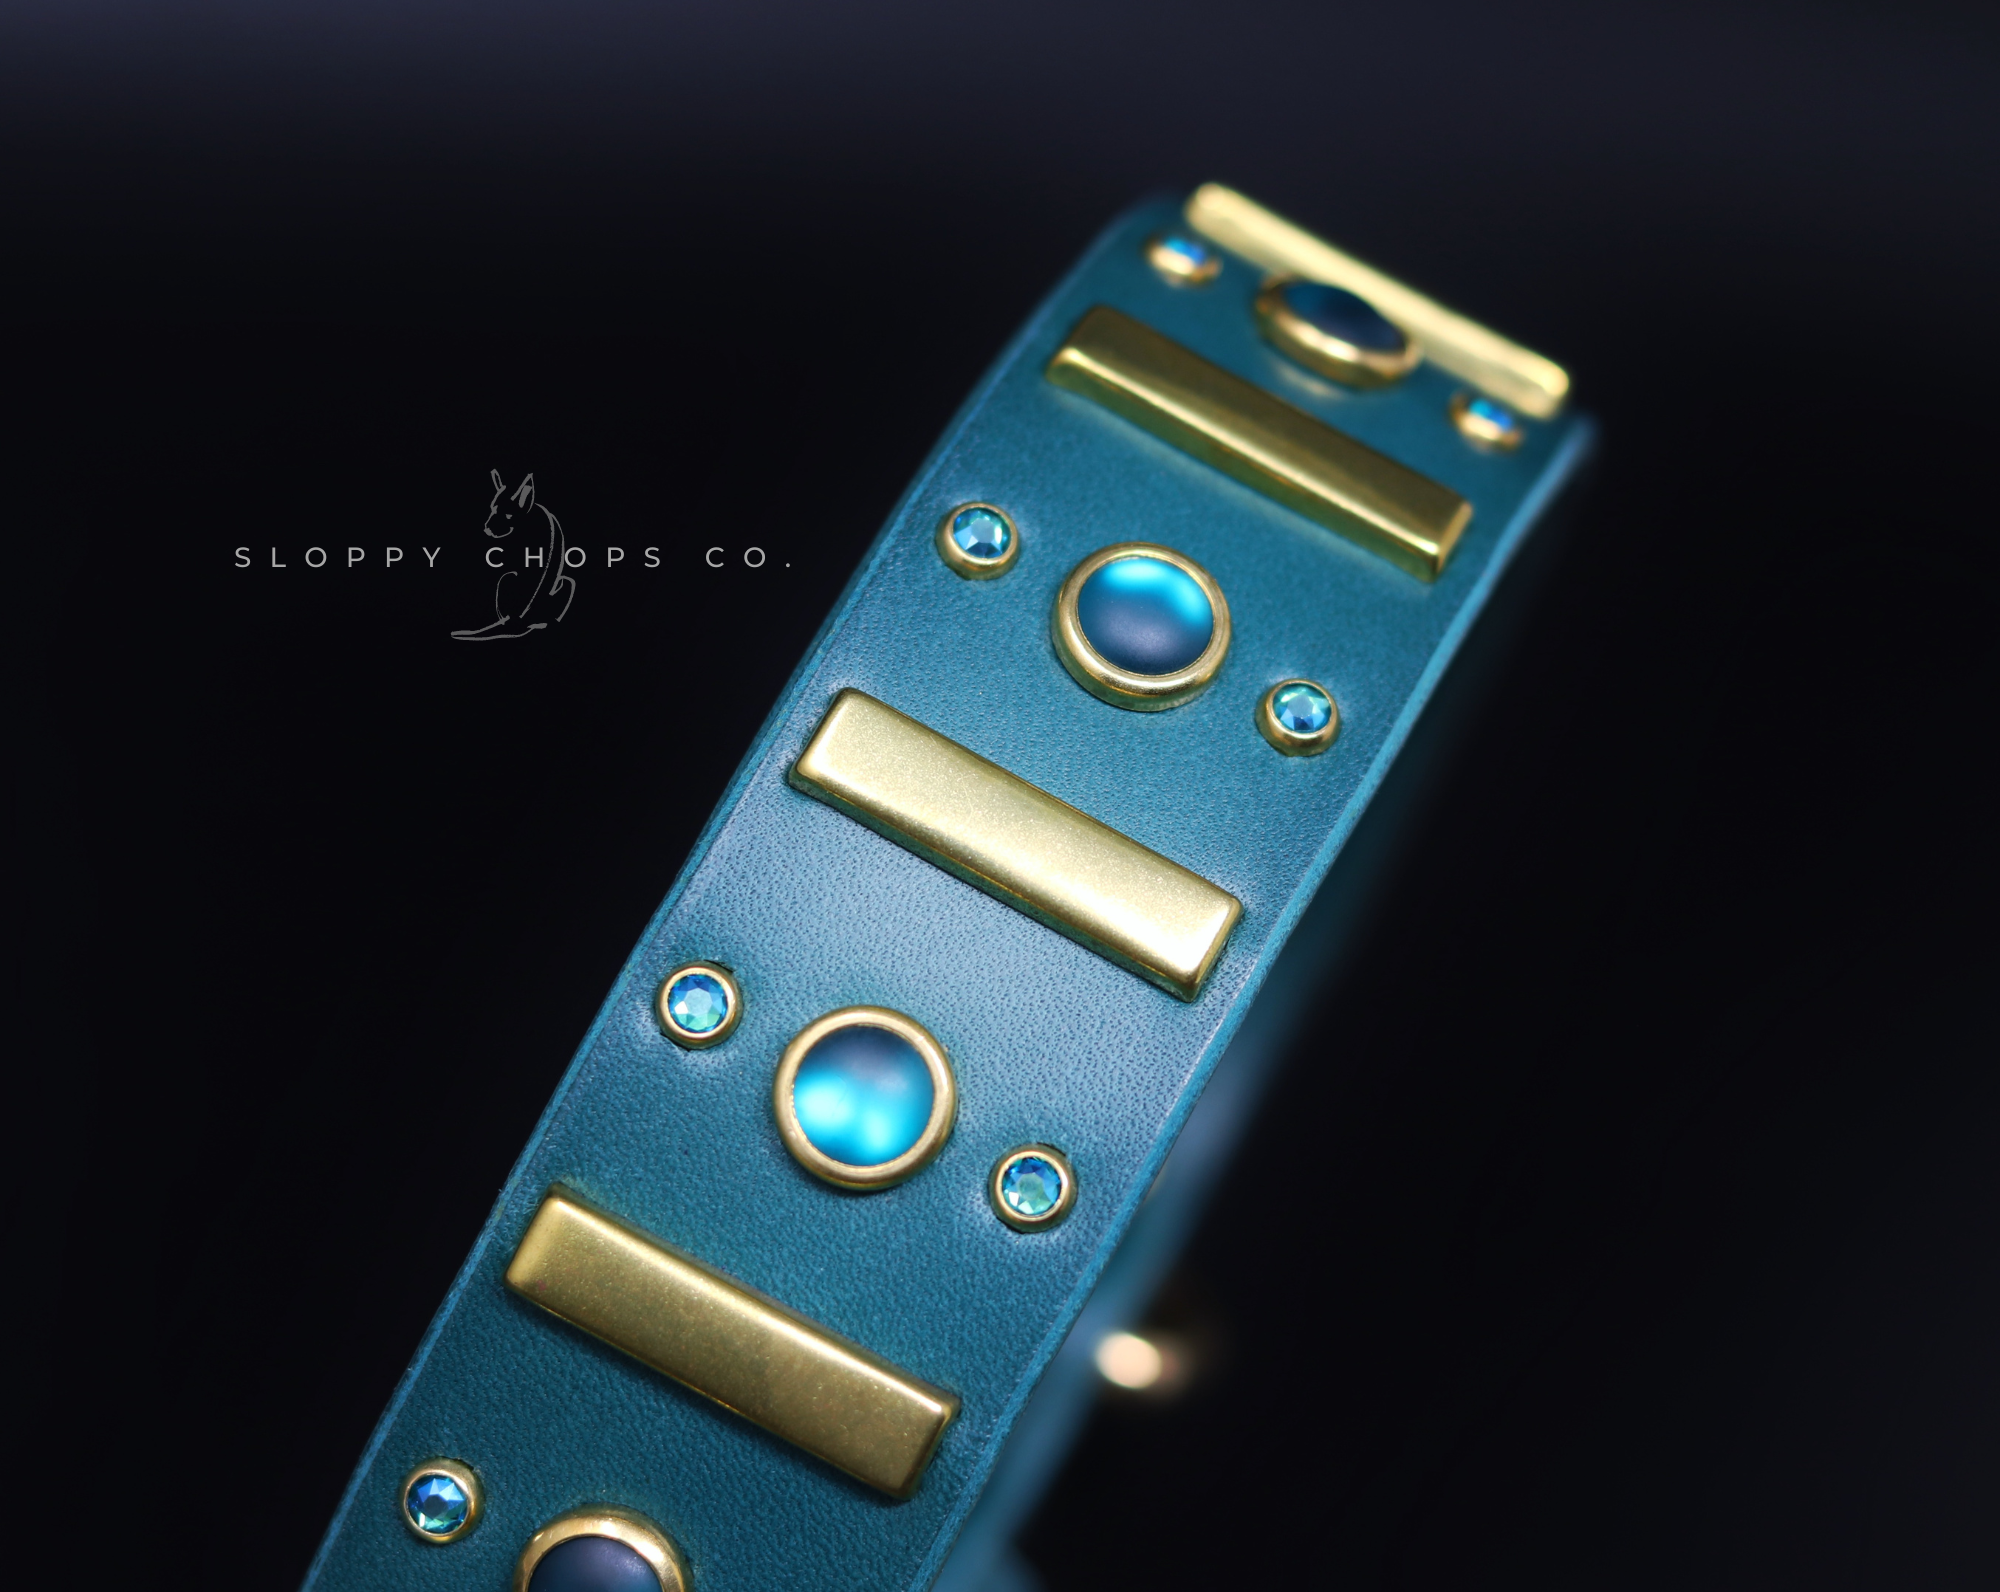 The 'Artemis' Leather Collar (1.5